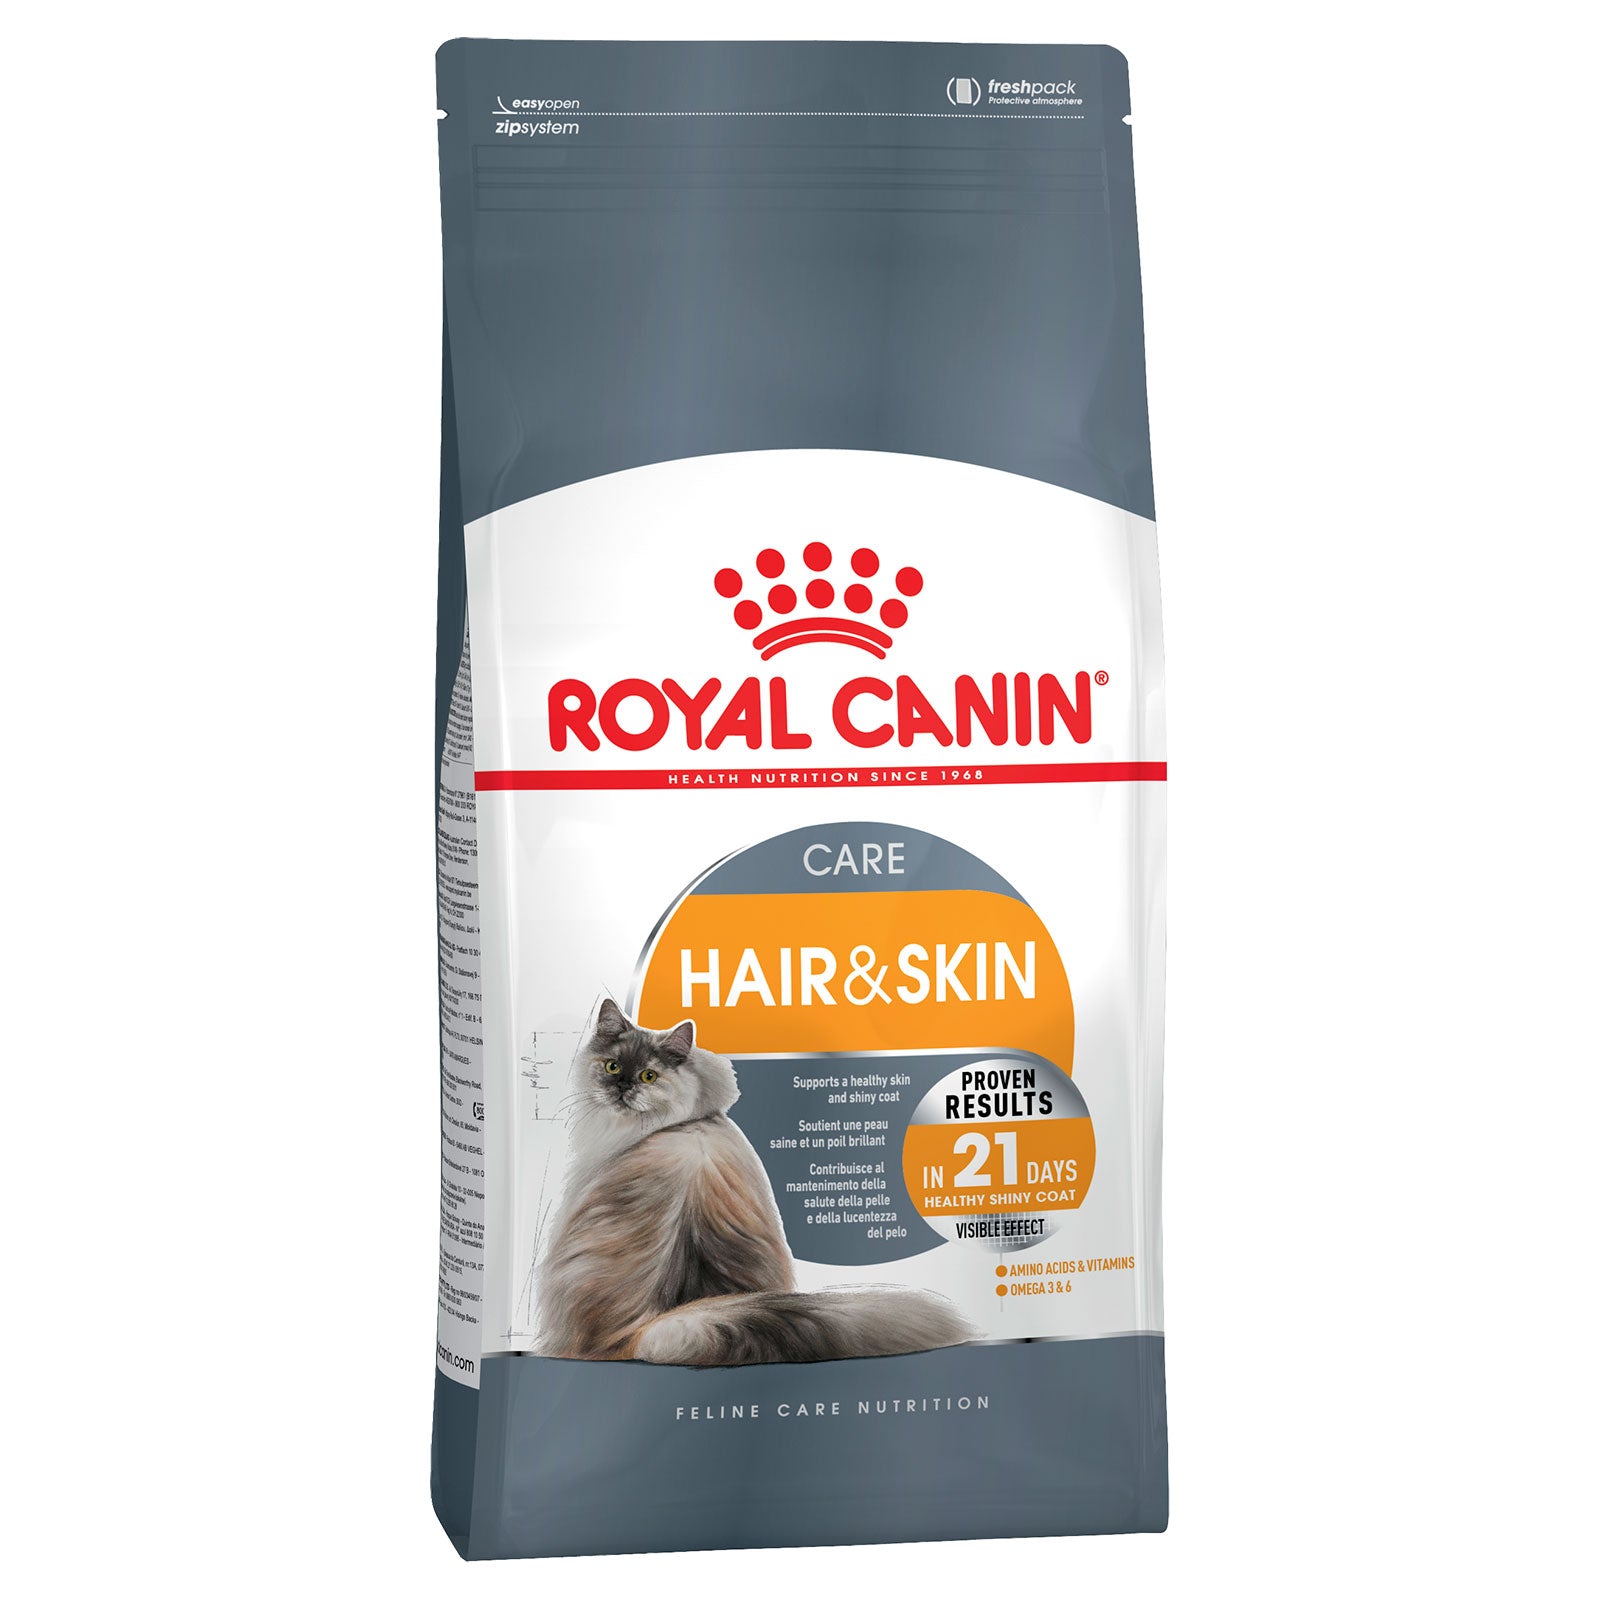 Royal Canin Cat Food Adult Hair & Skin Care